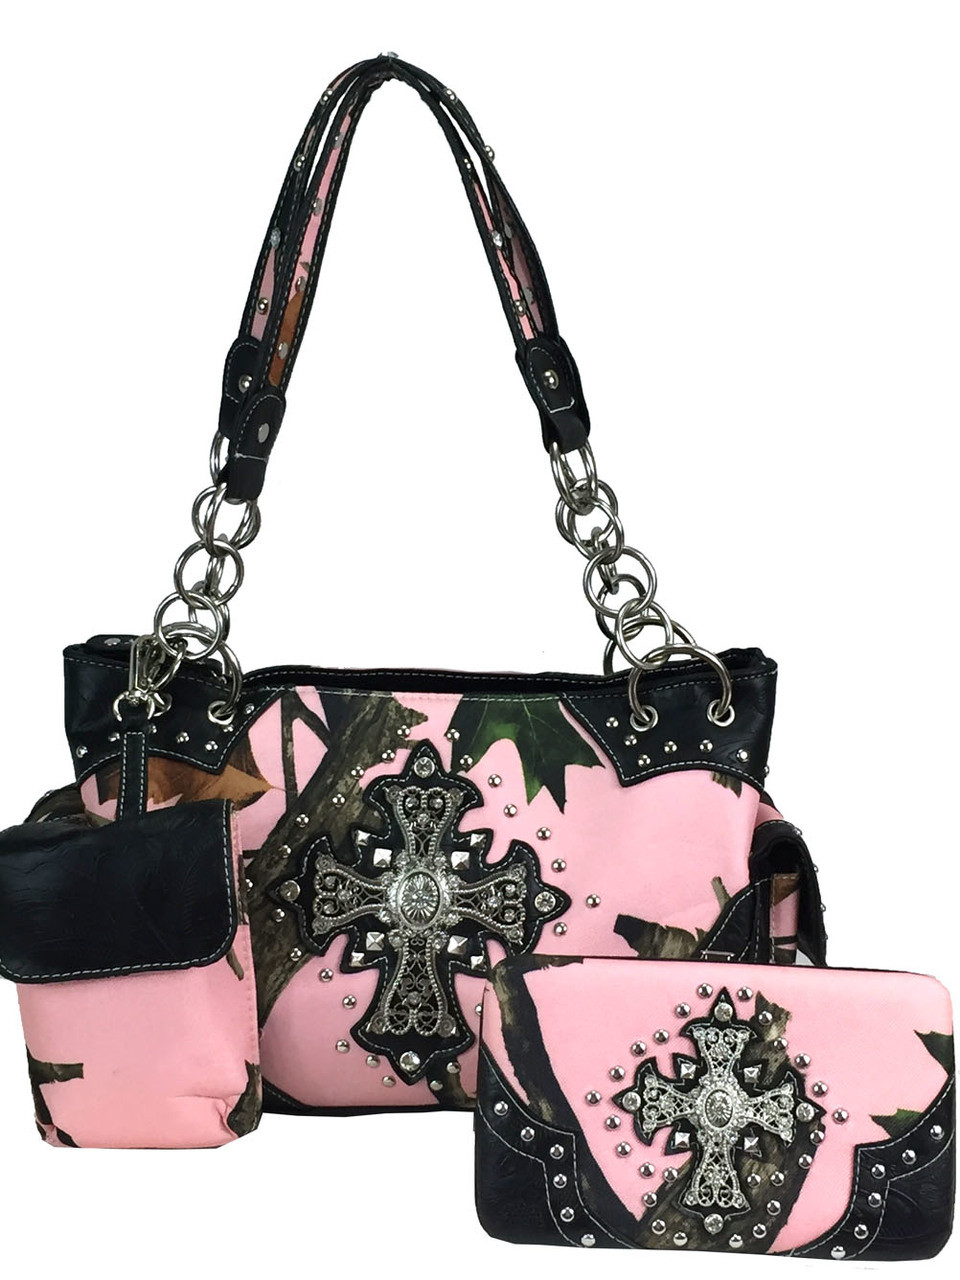 Black Crossbody Bag, Pink & Gold Camo Strap - Fleurty Girl